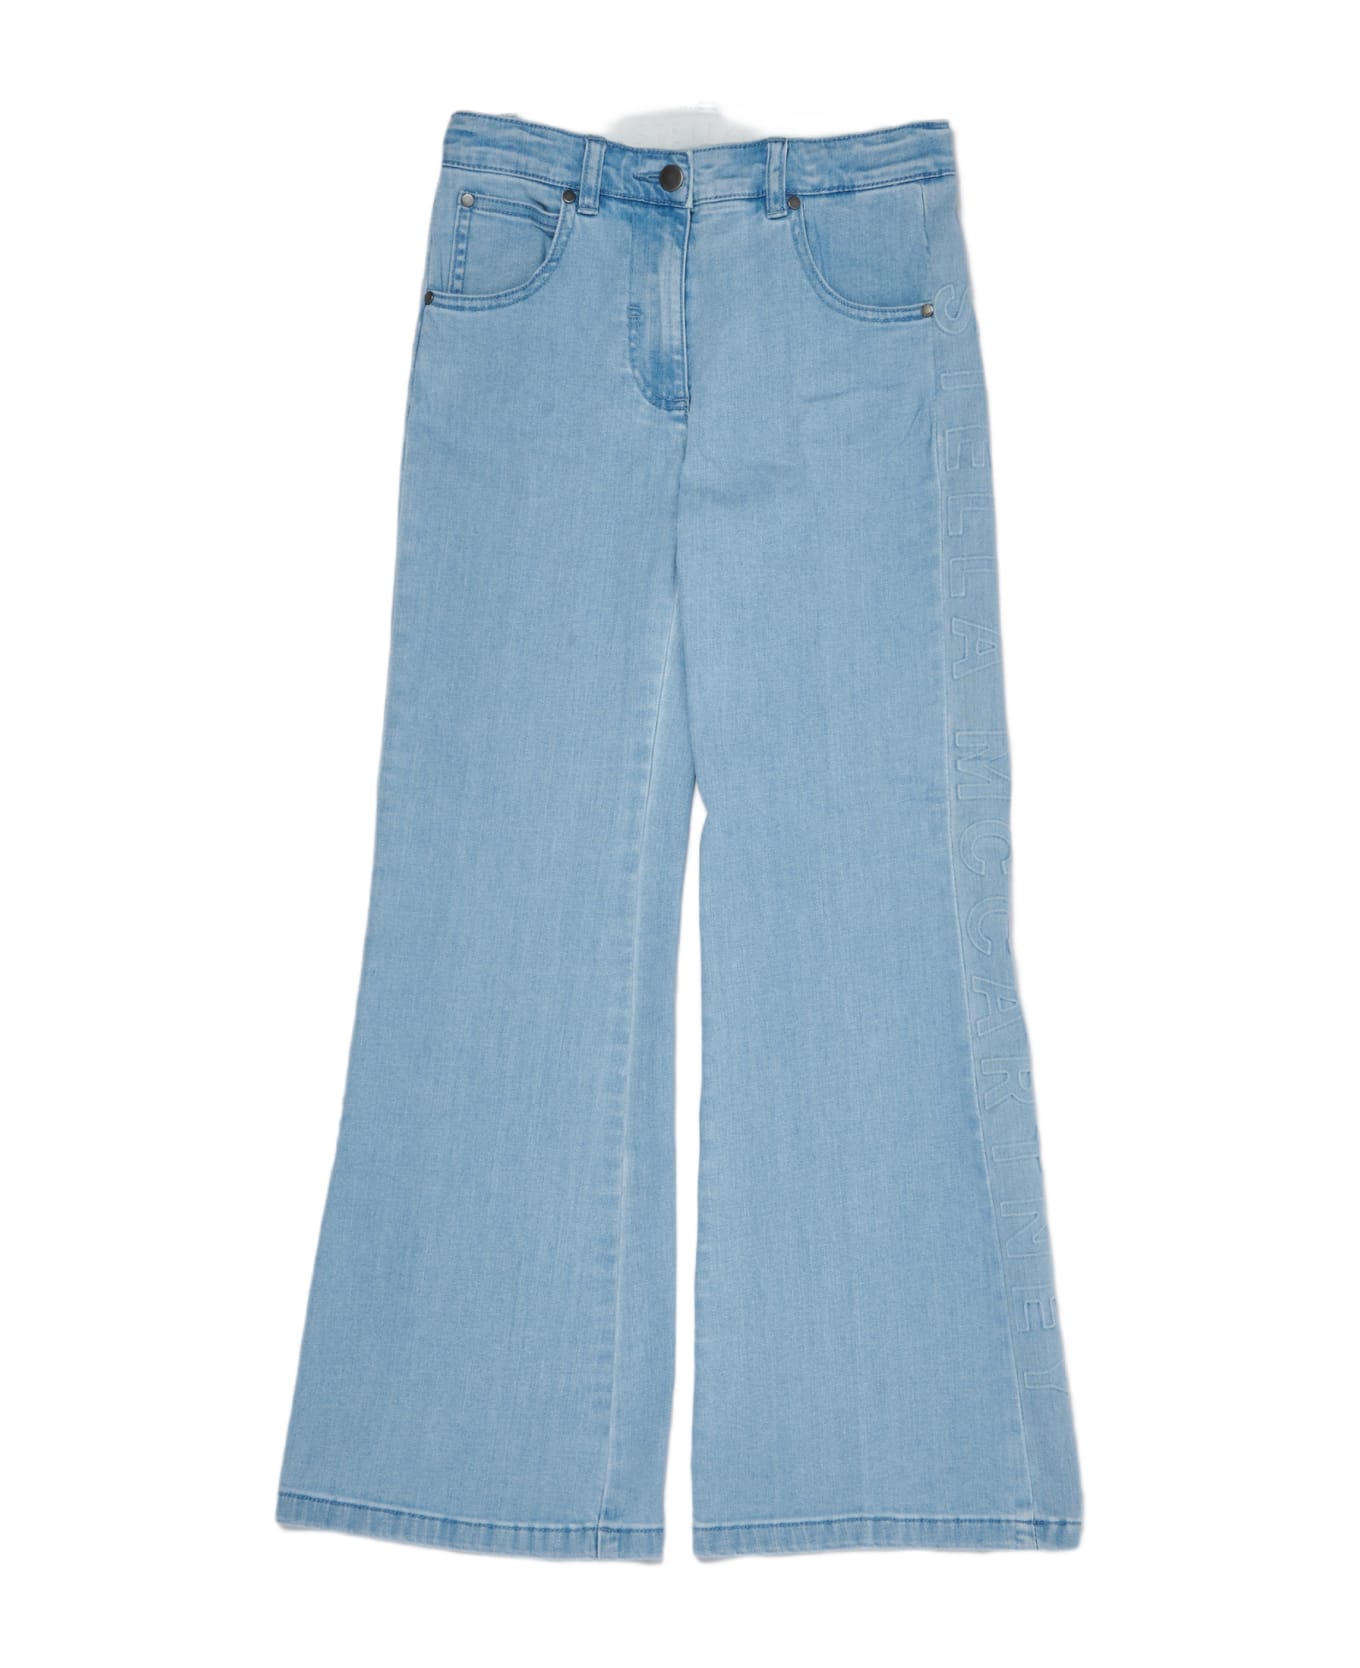 Stella McCartney Jeans Jeans - DENIM CHIARO ボトムス